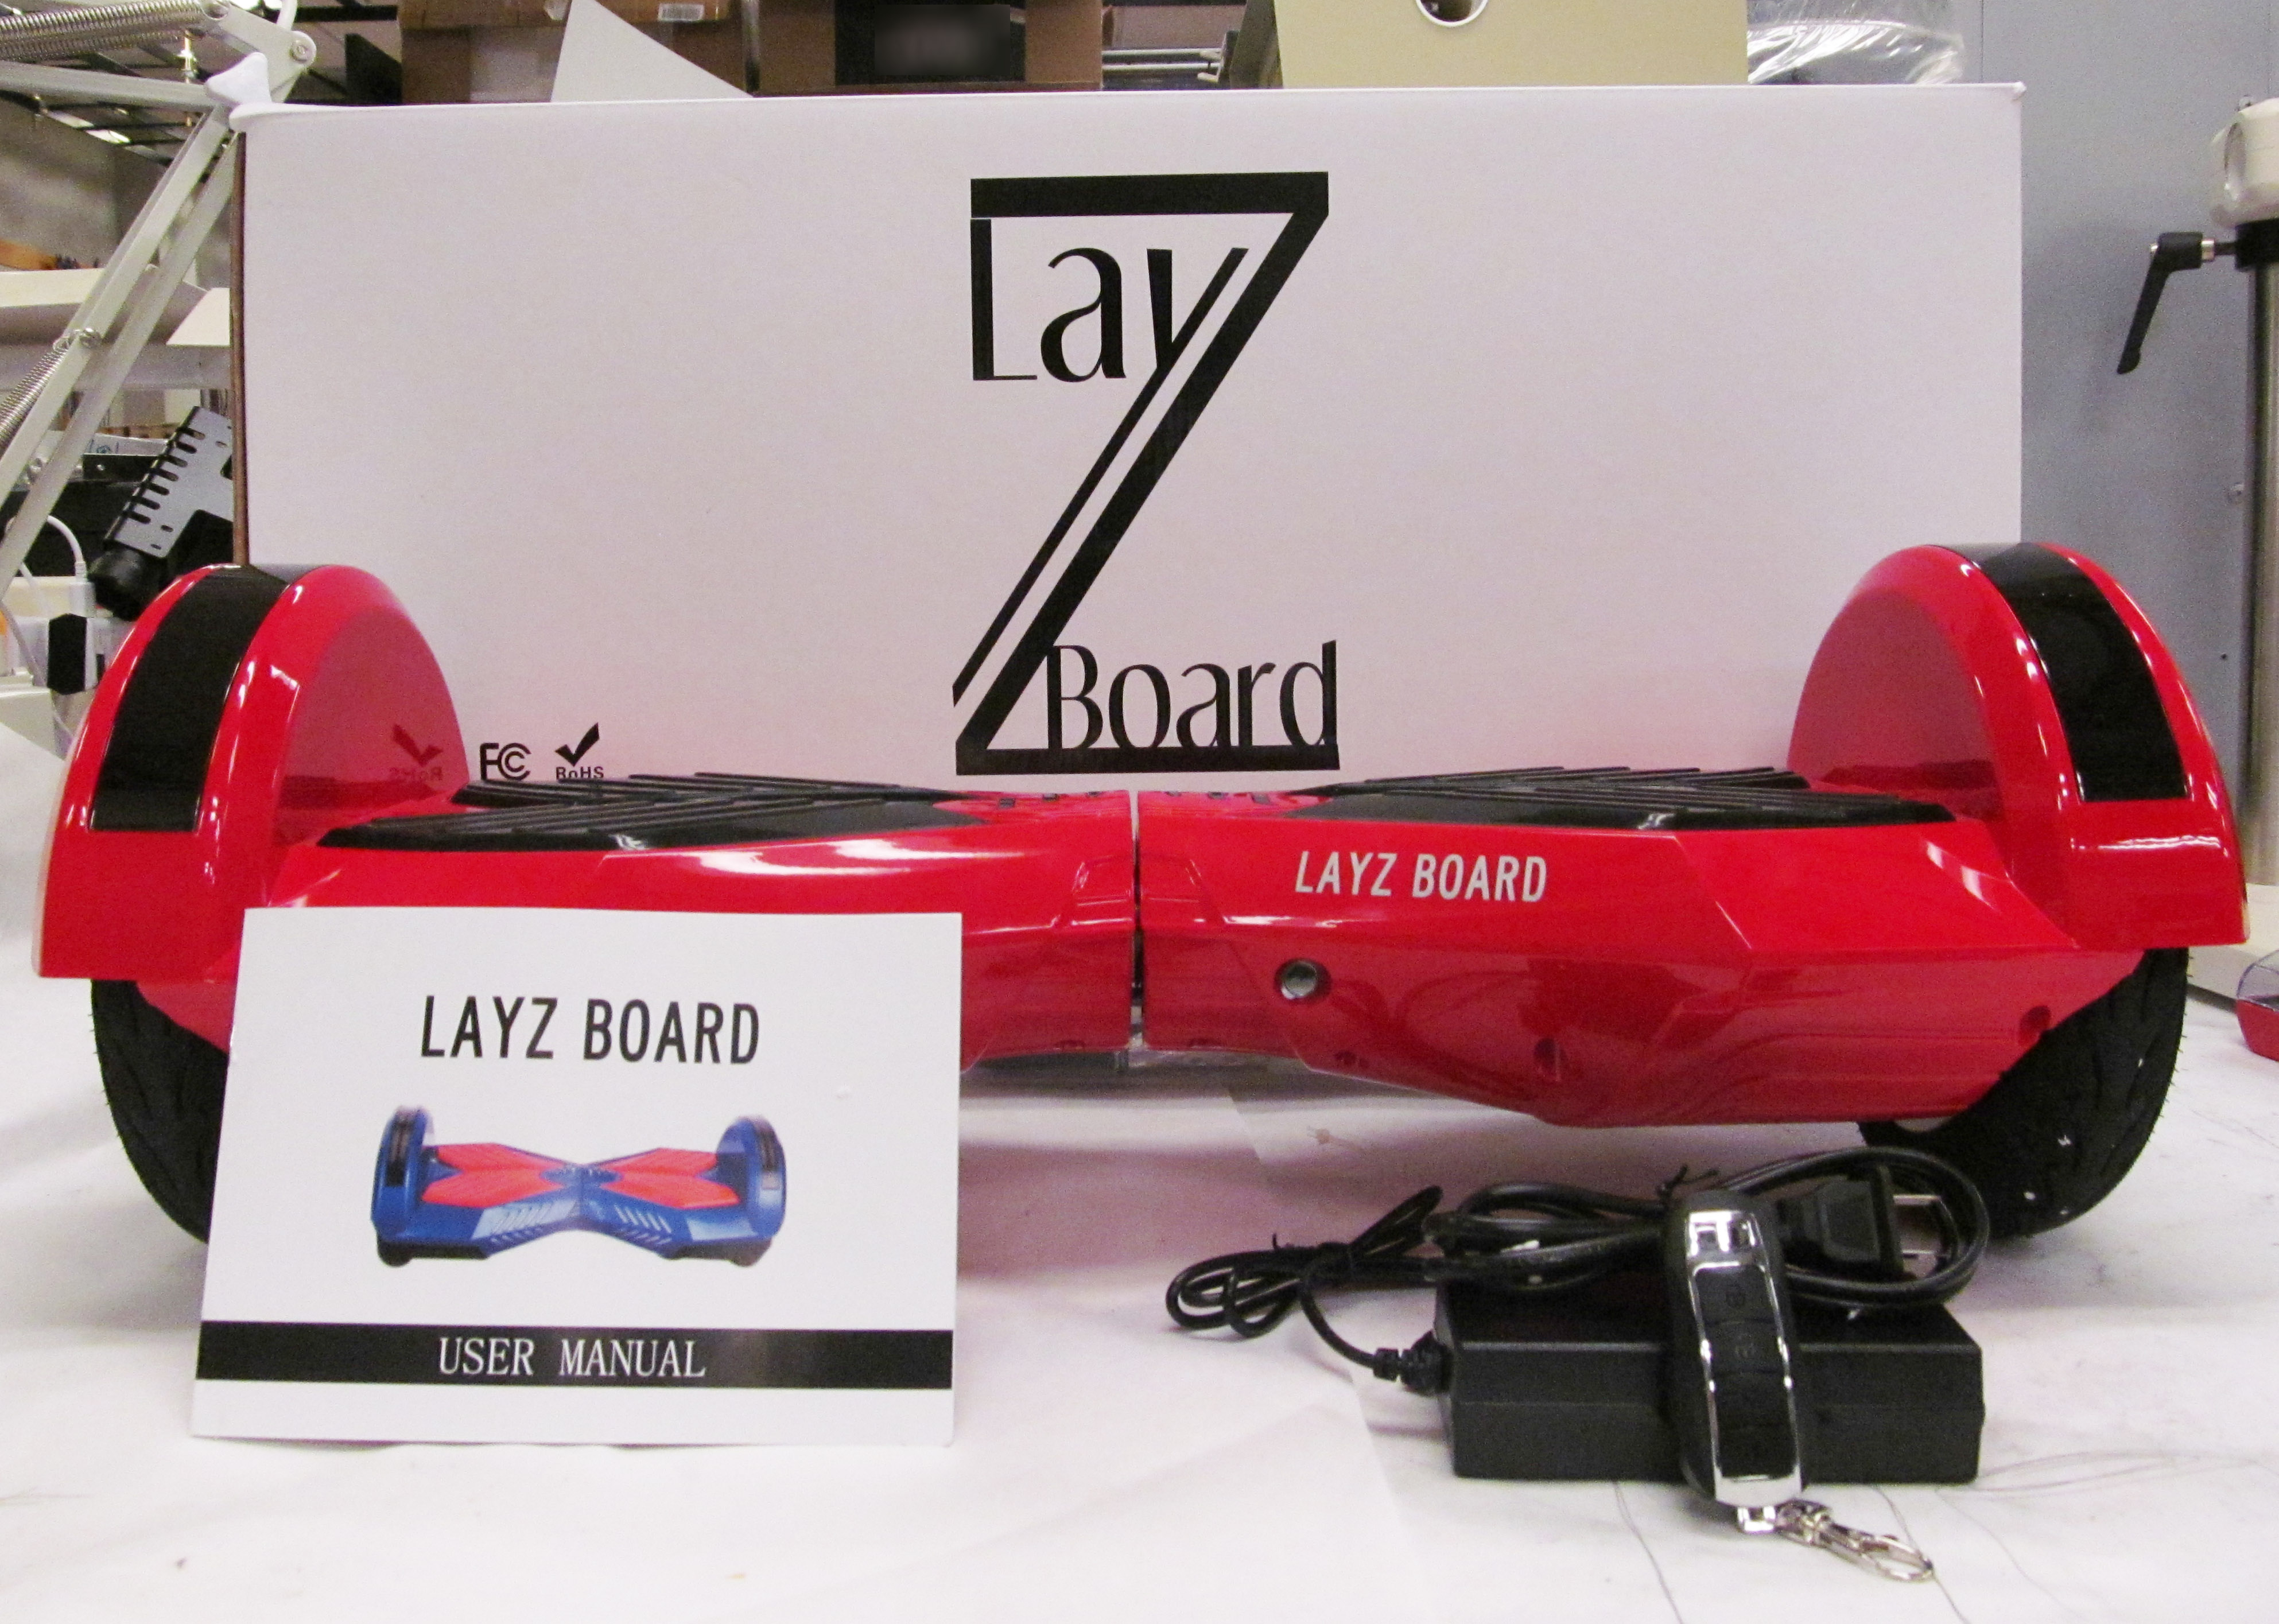 LayZ Board